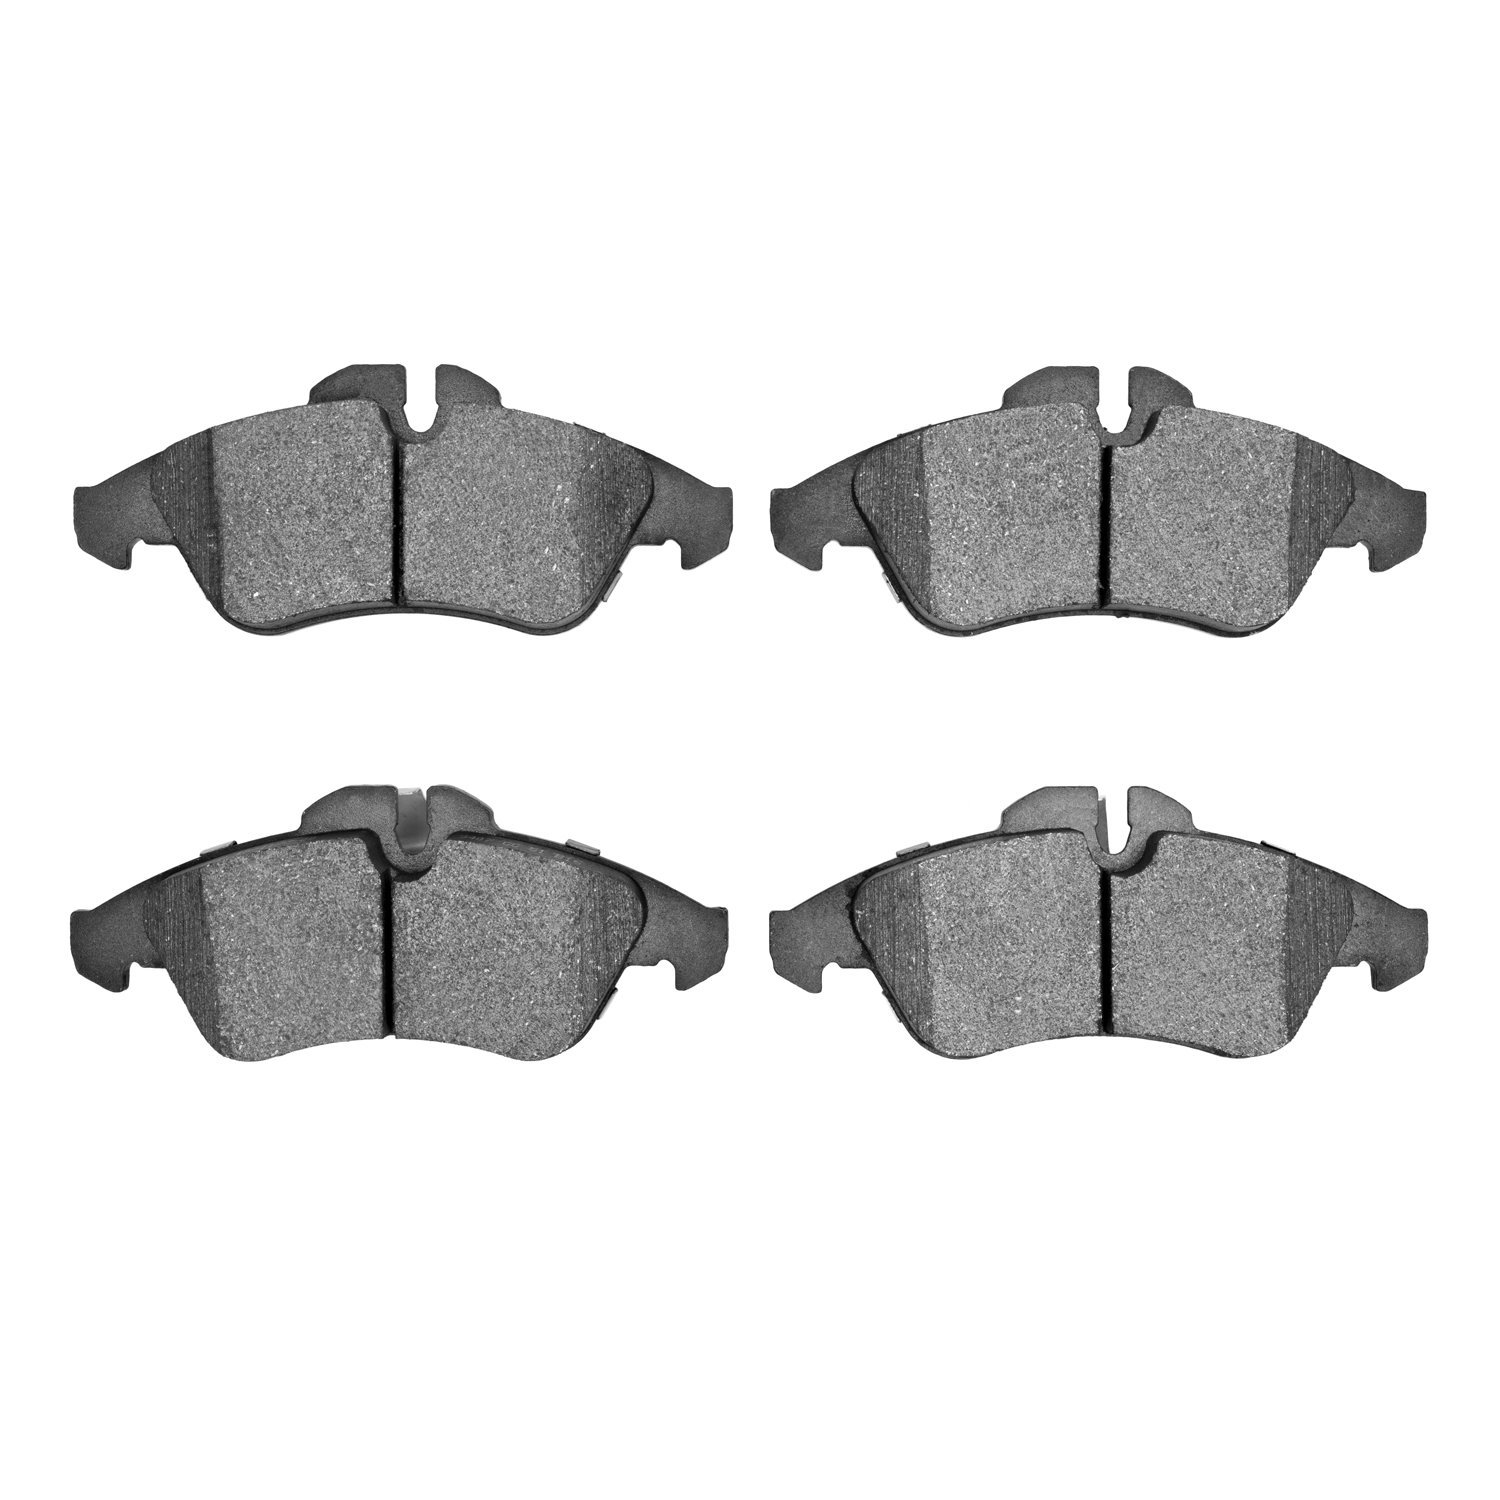 Semi-Metallic Brake Pads, 2002-2006 Fits Multiple Makes/Models, Position: Front